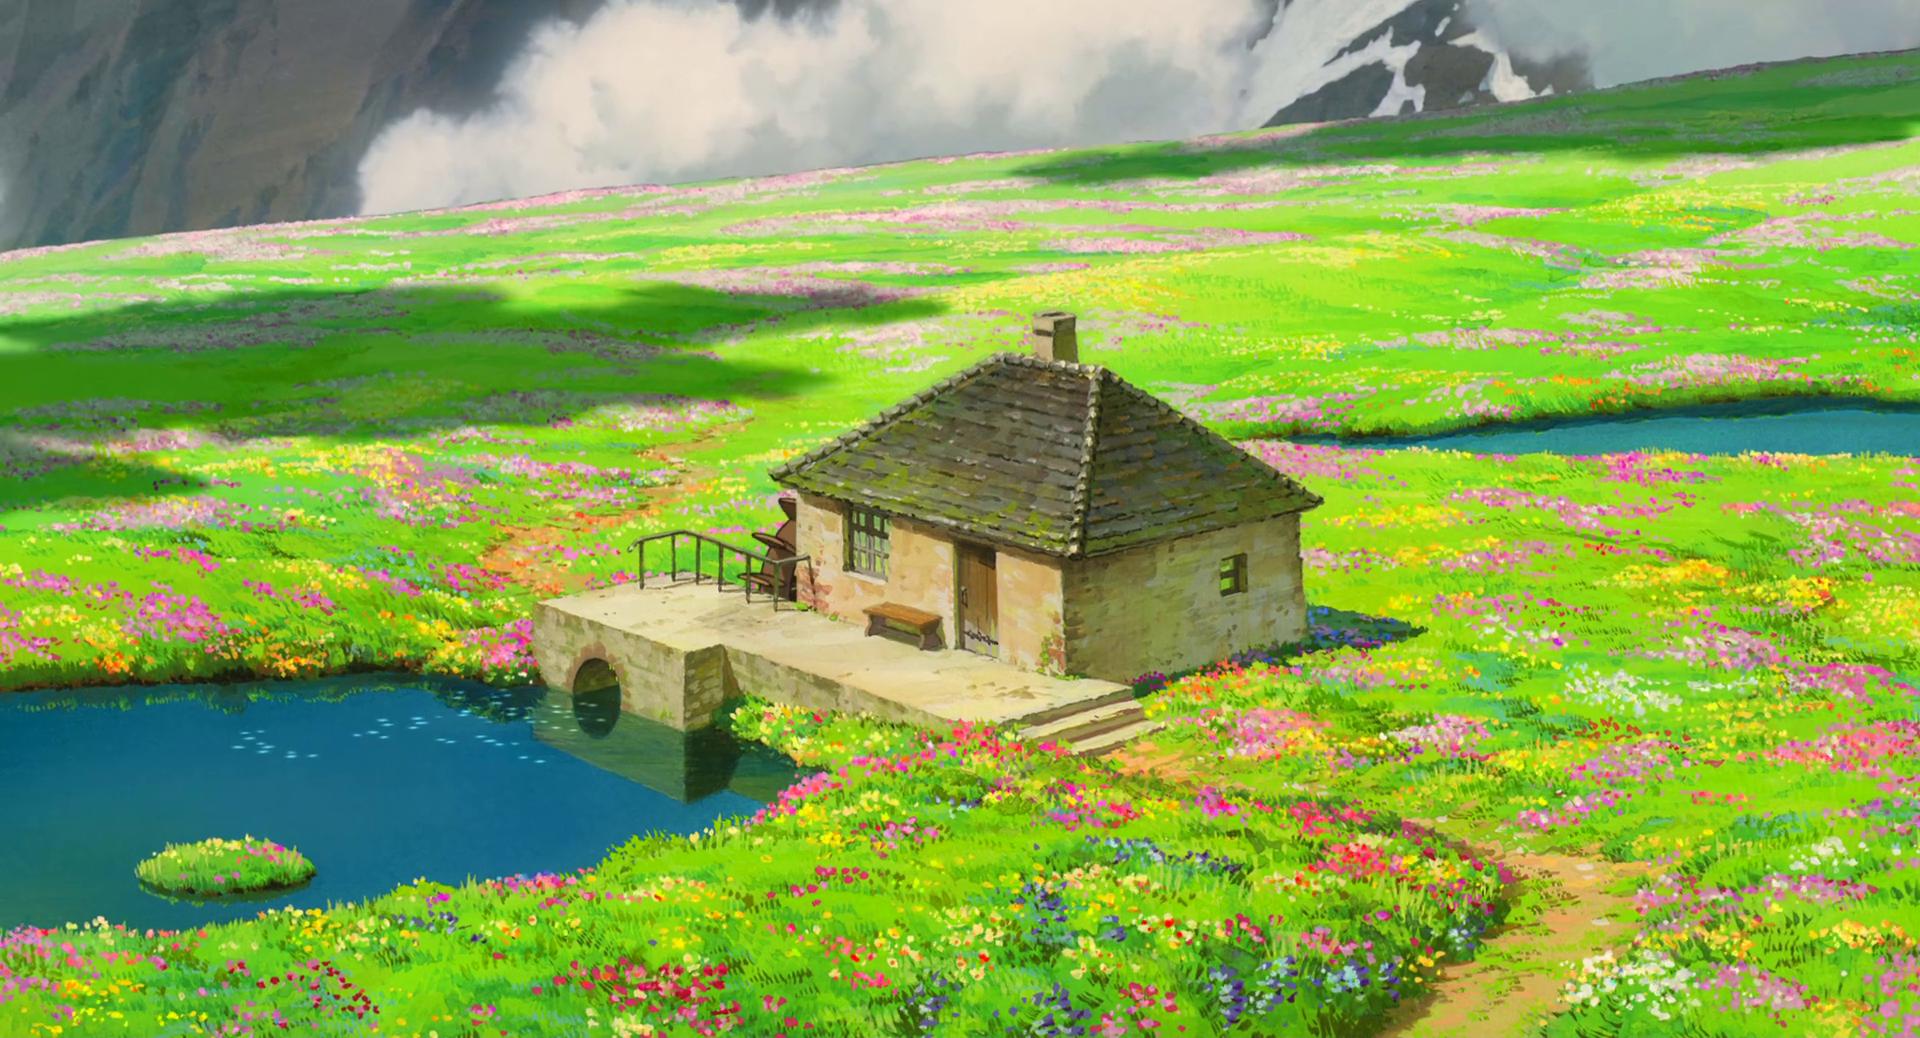 Studio Ghibli Landscape Wallpapers